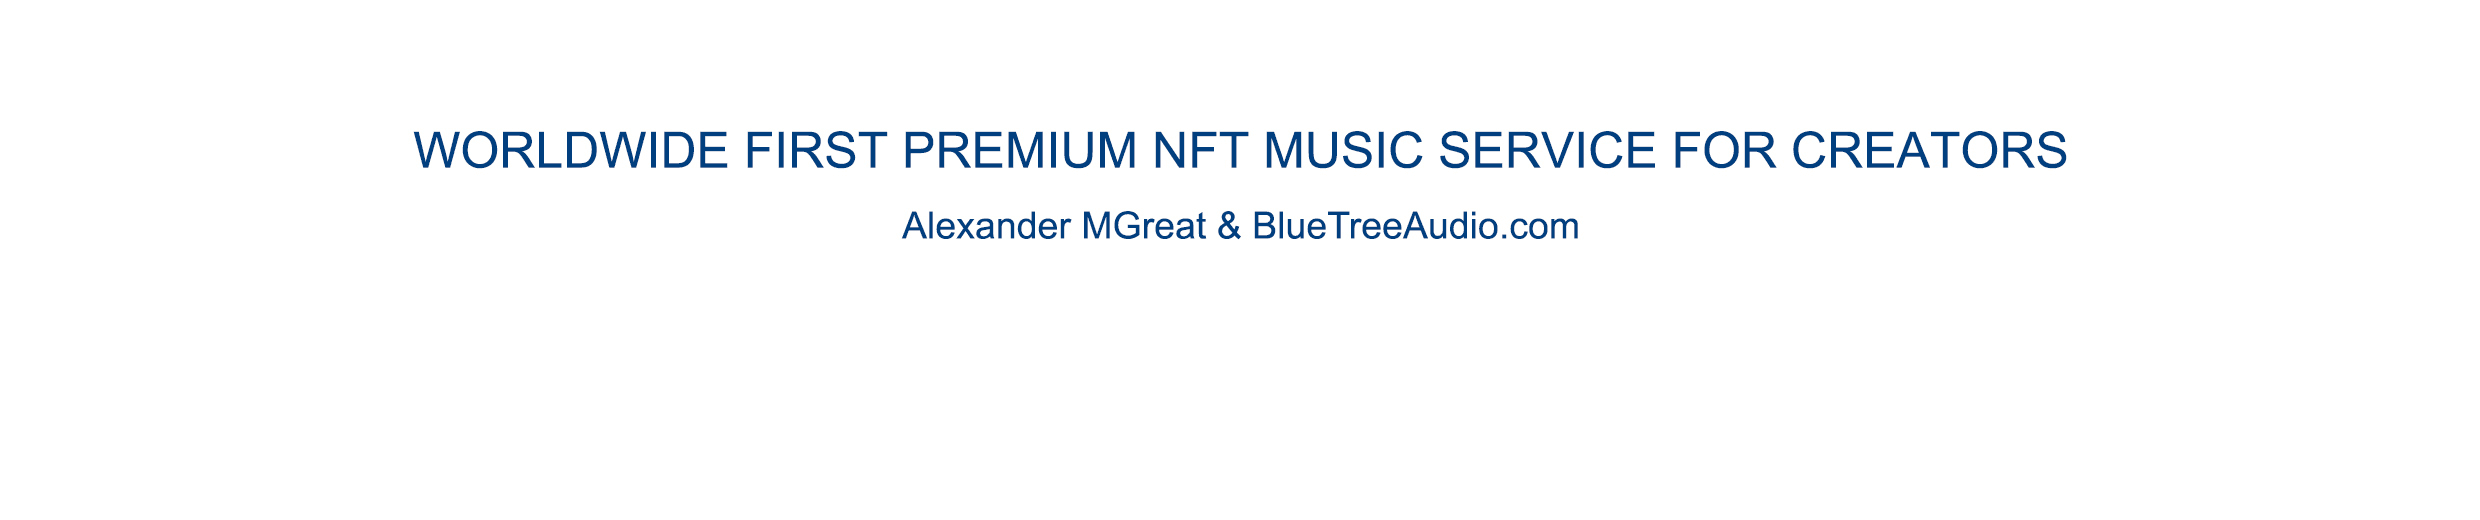 BlueTreeAudio banner